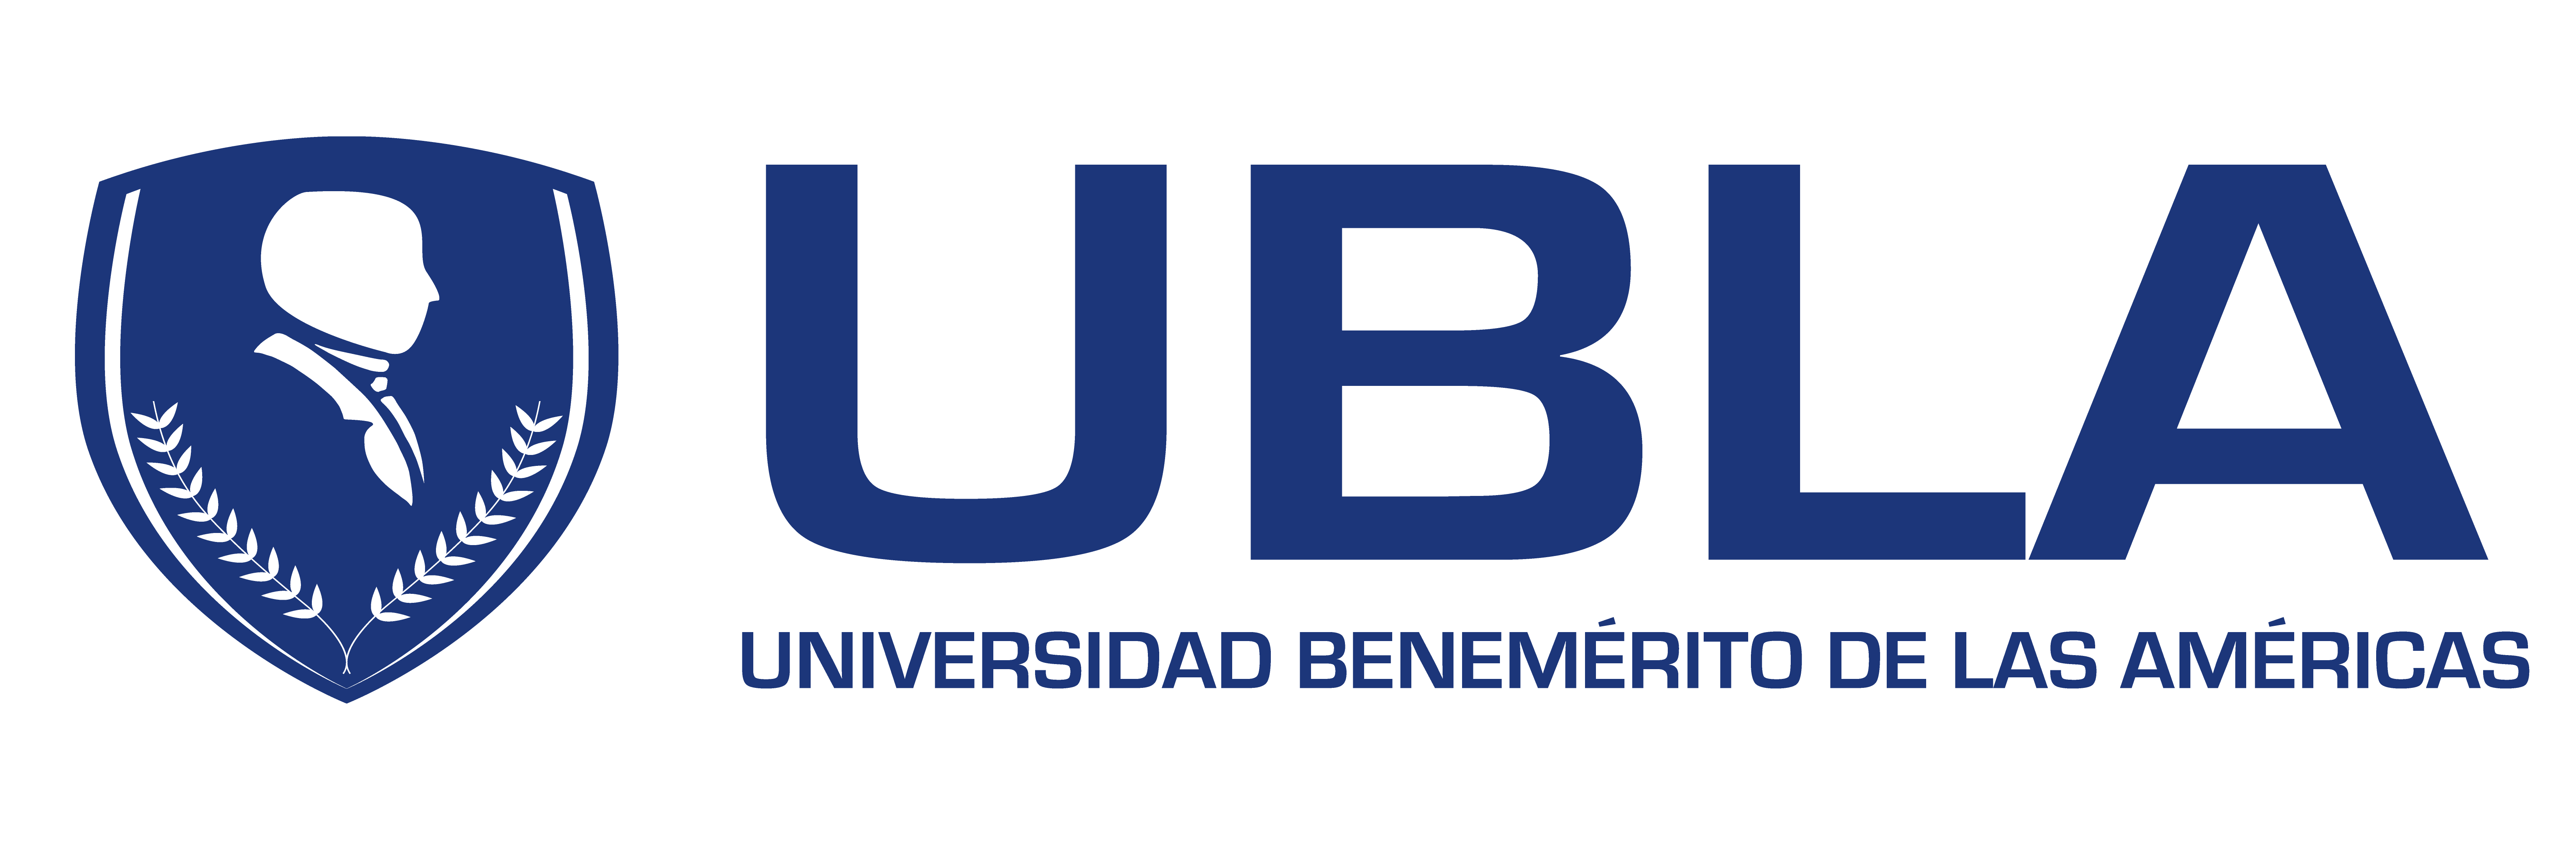 Logo ubla azul